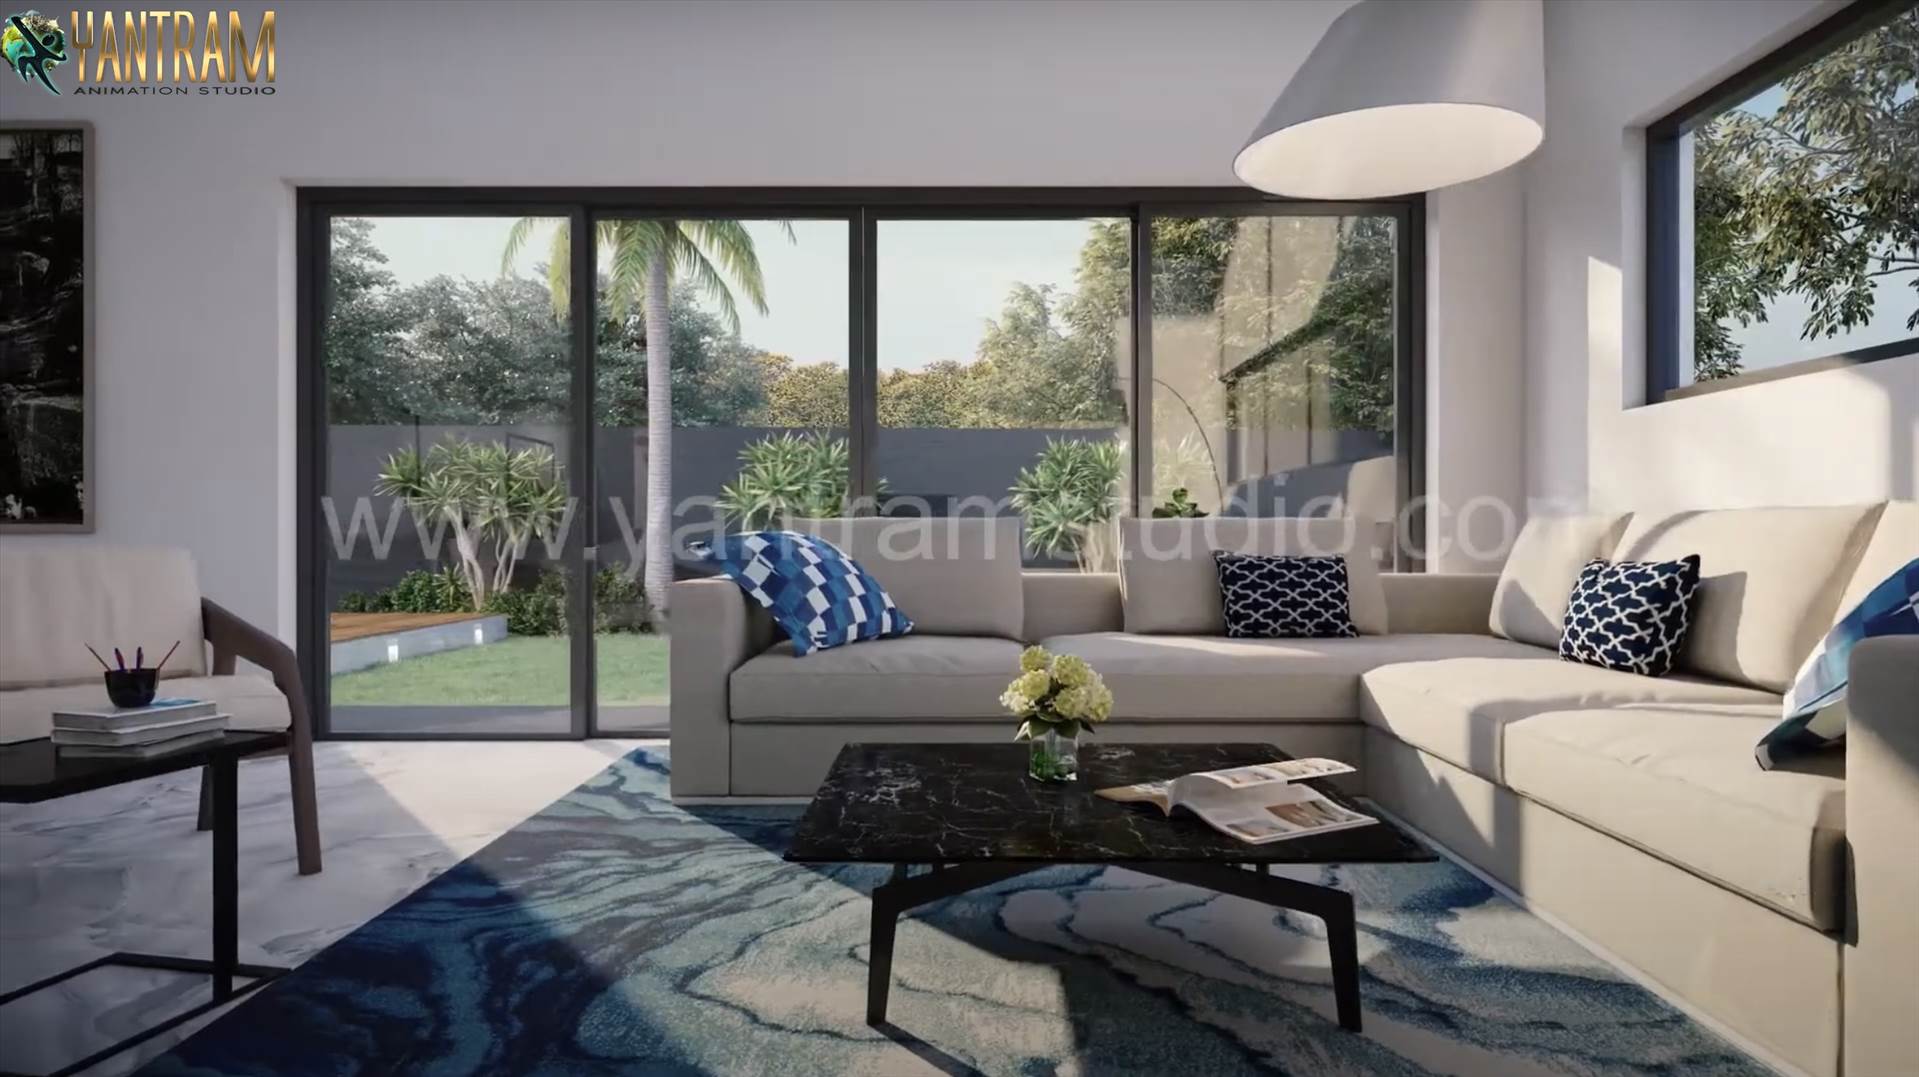 3D-Interior-Design-Services-for-living-room-in-rajkot 1.jpeg  by 3dyantram studio